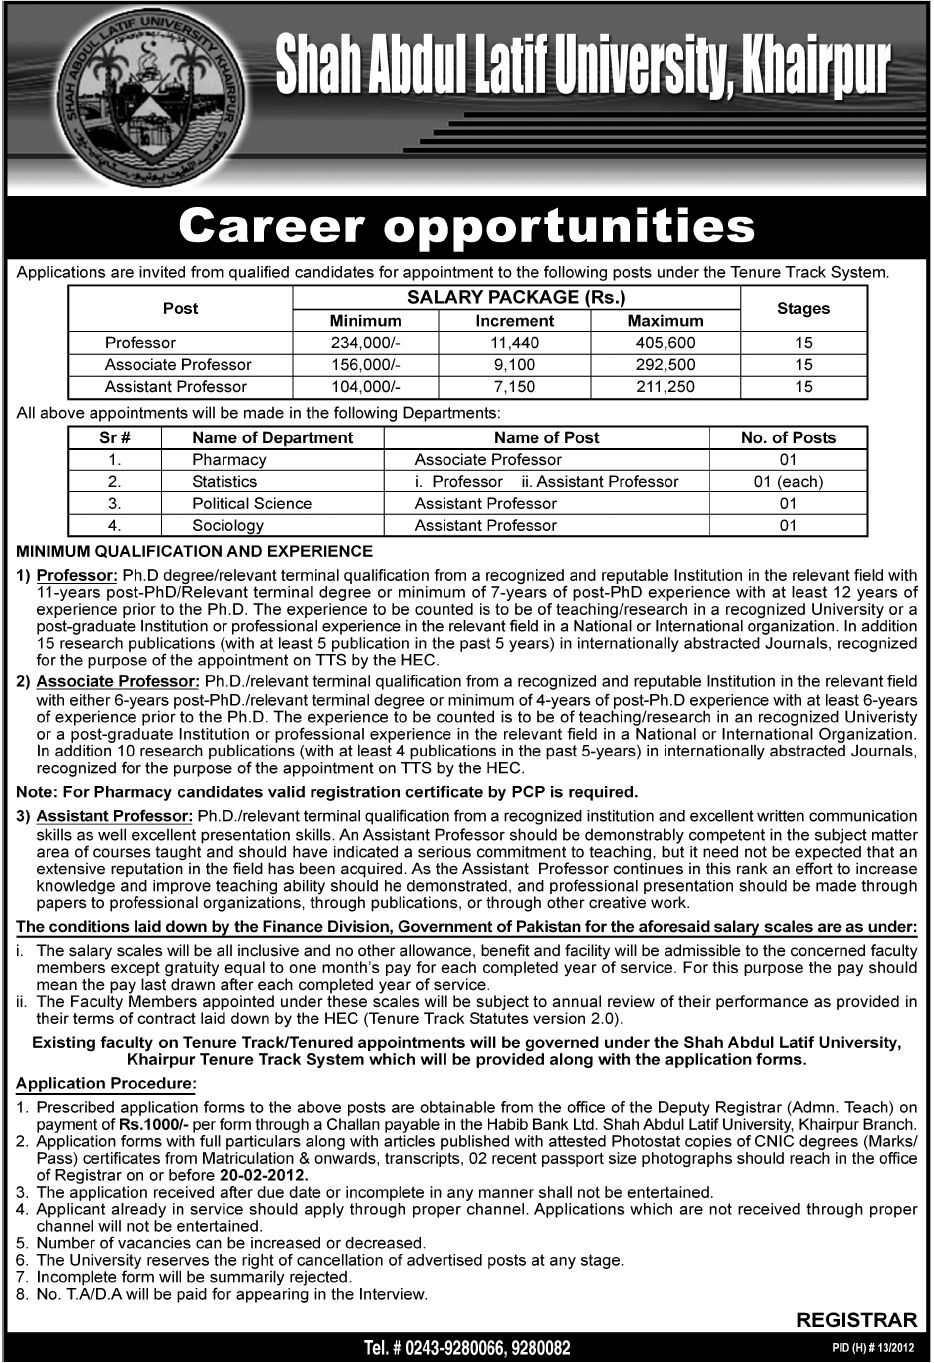 Shah Abdul Latif University, Khairpur Jobs Opportunity